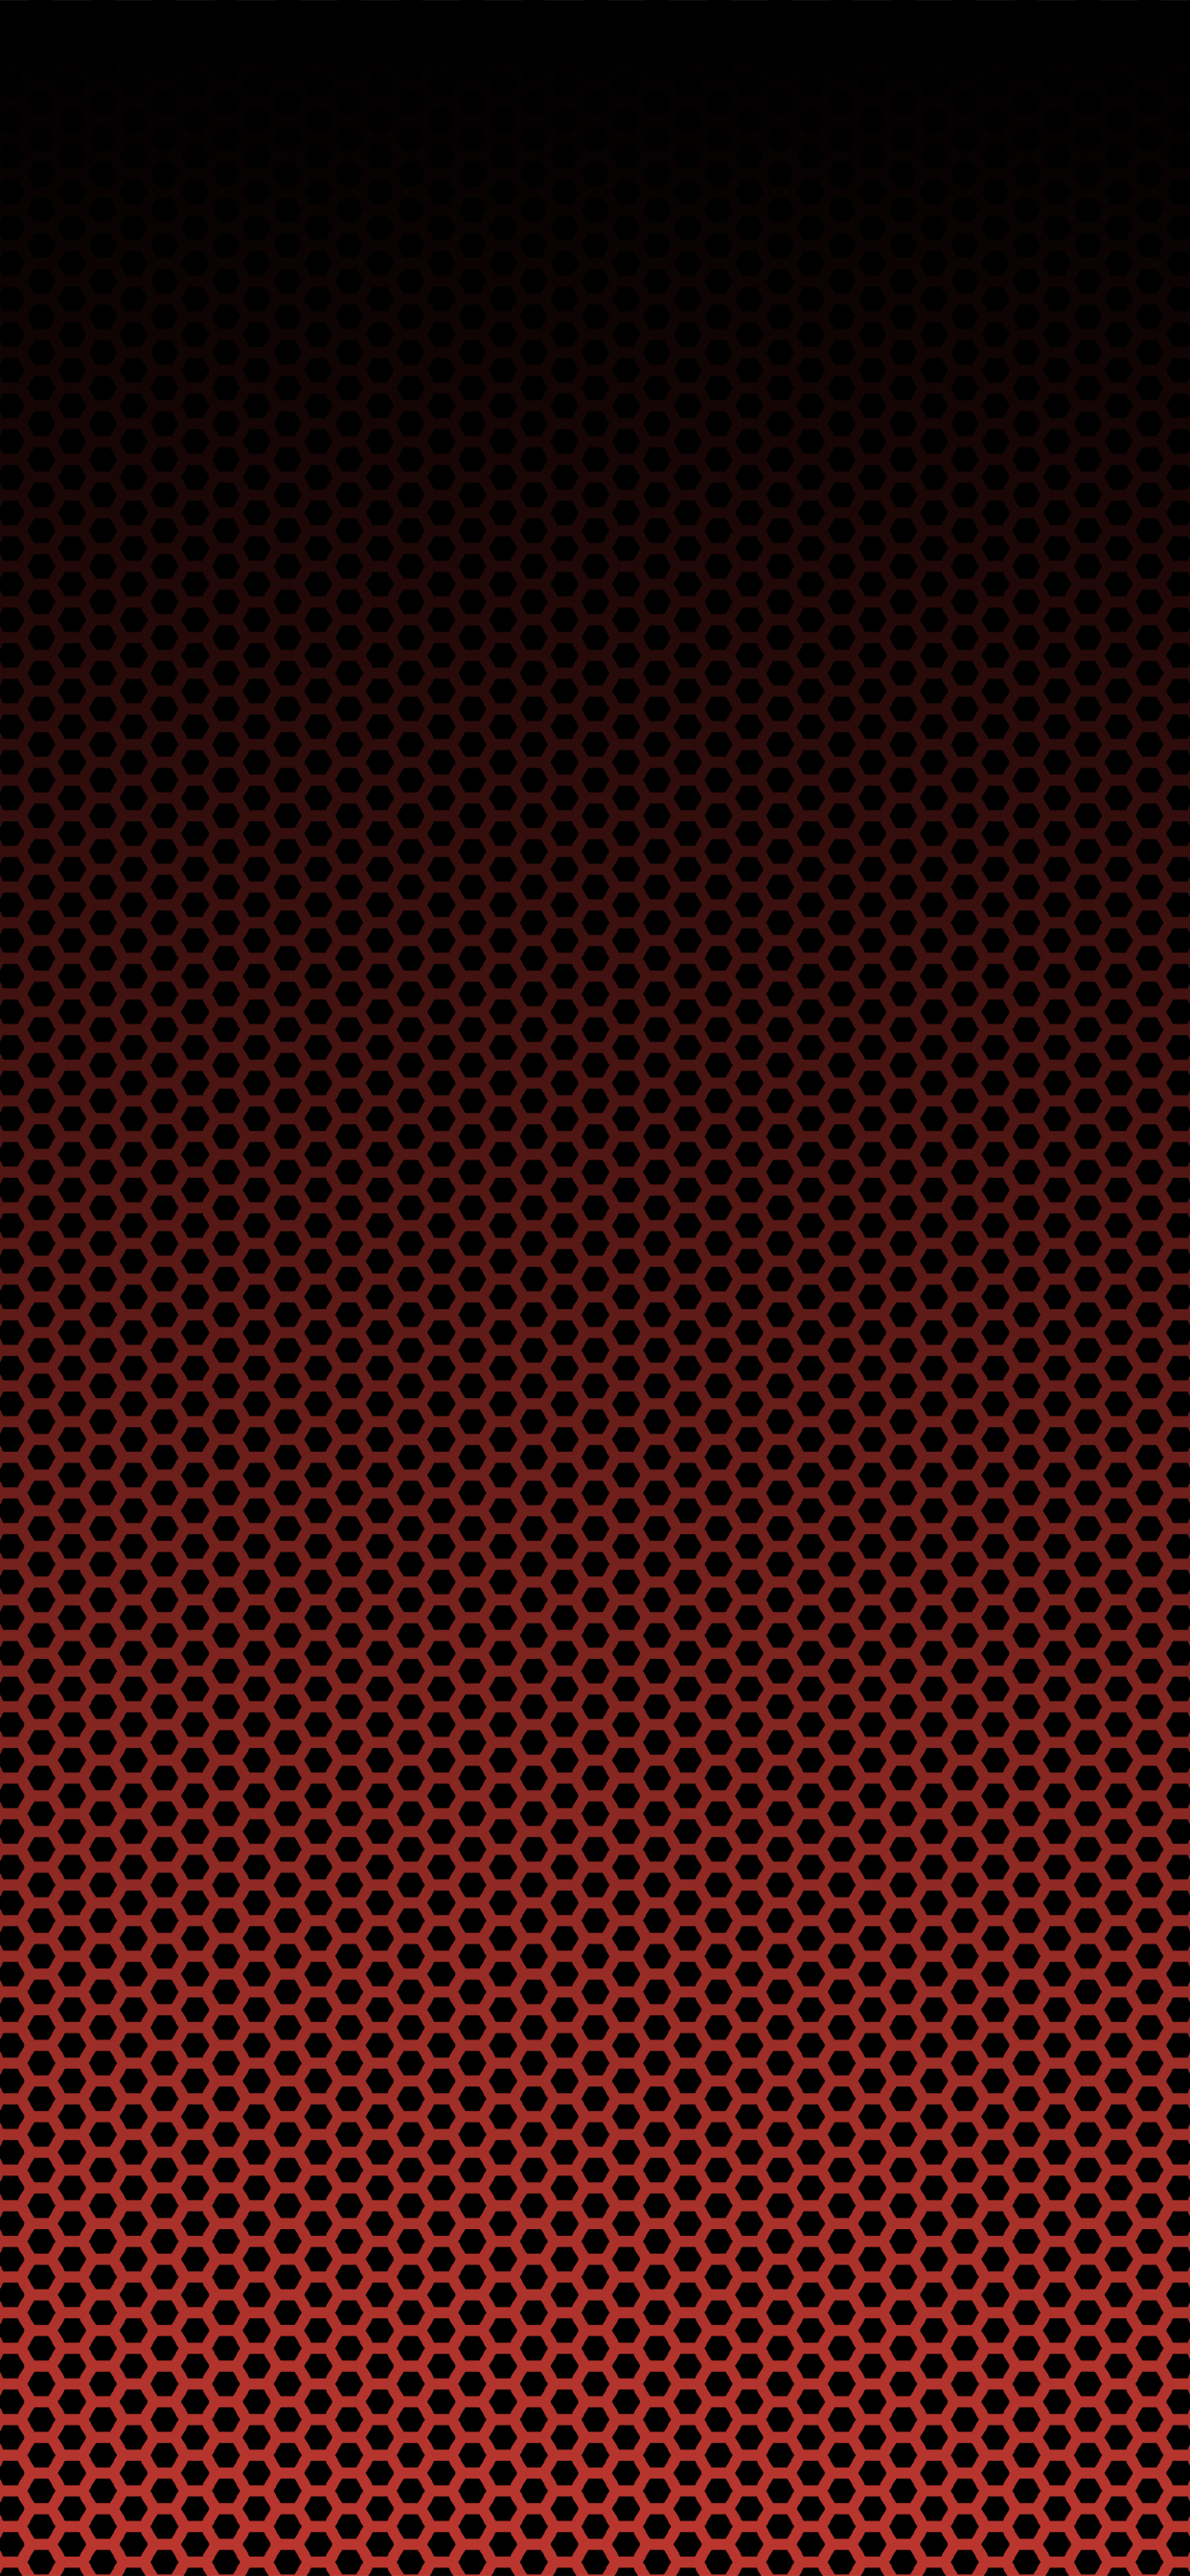 Dark pattern wallpaper for iPhone